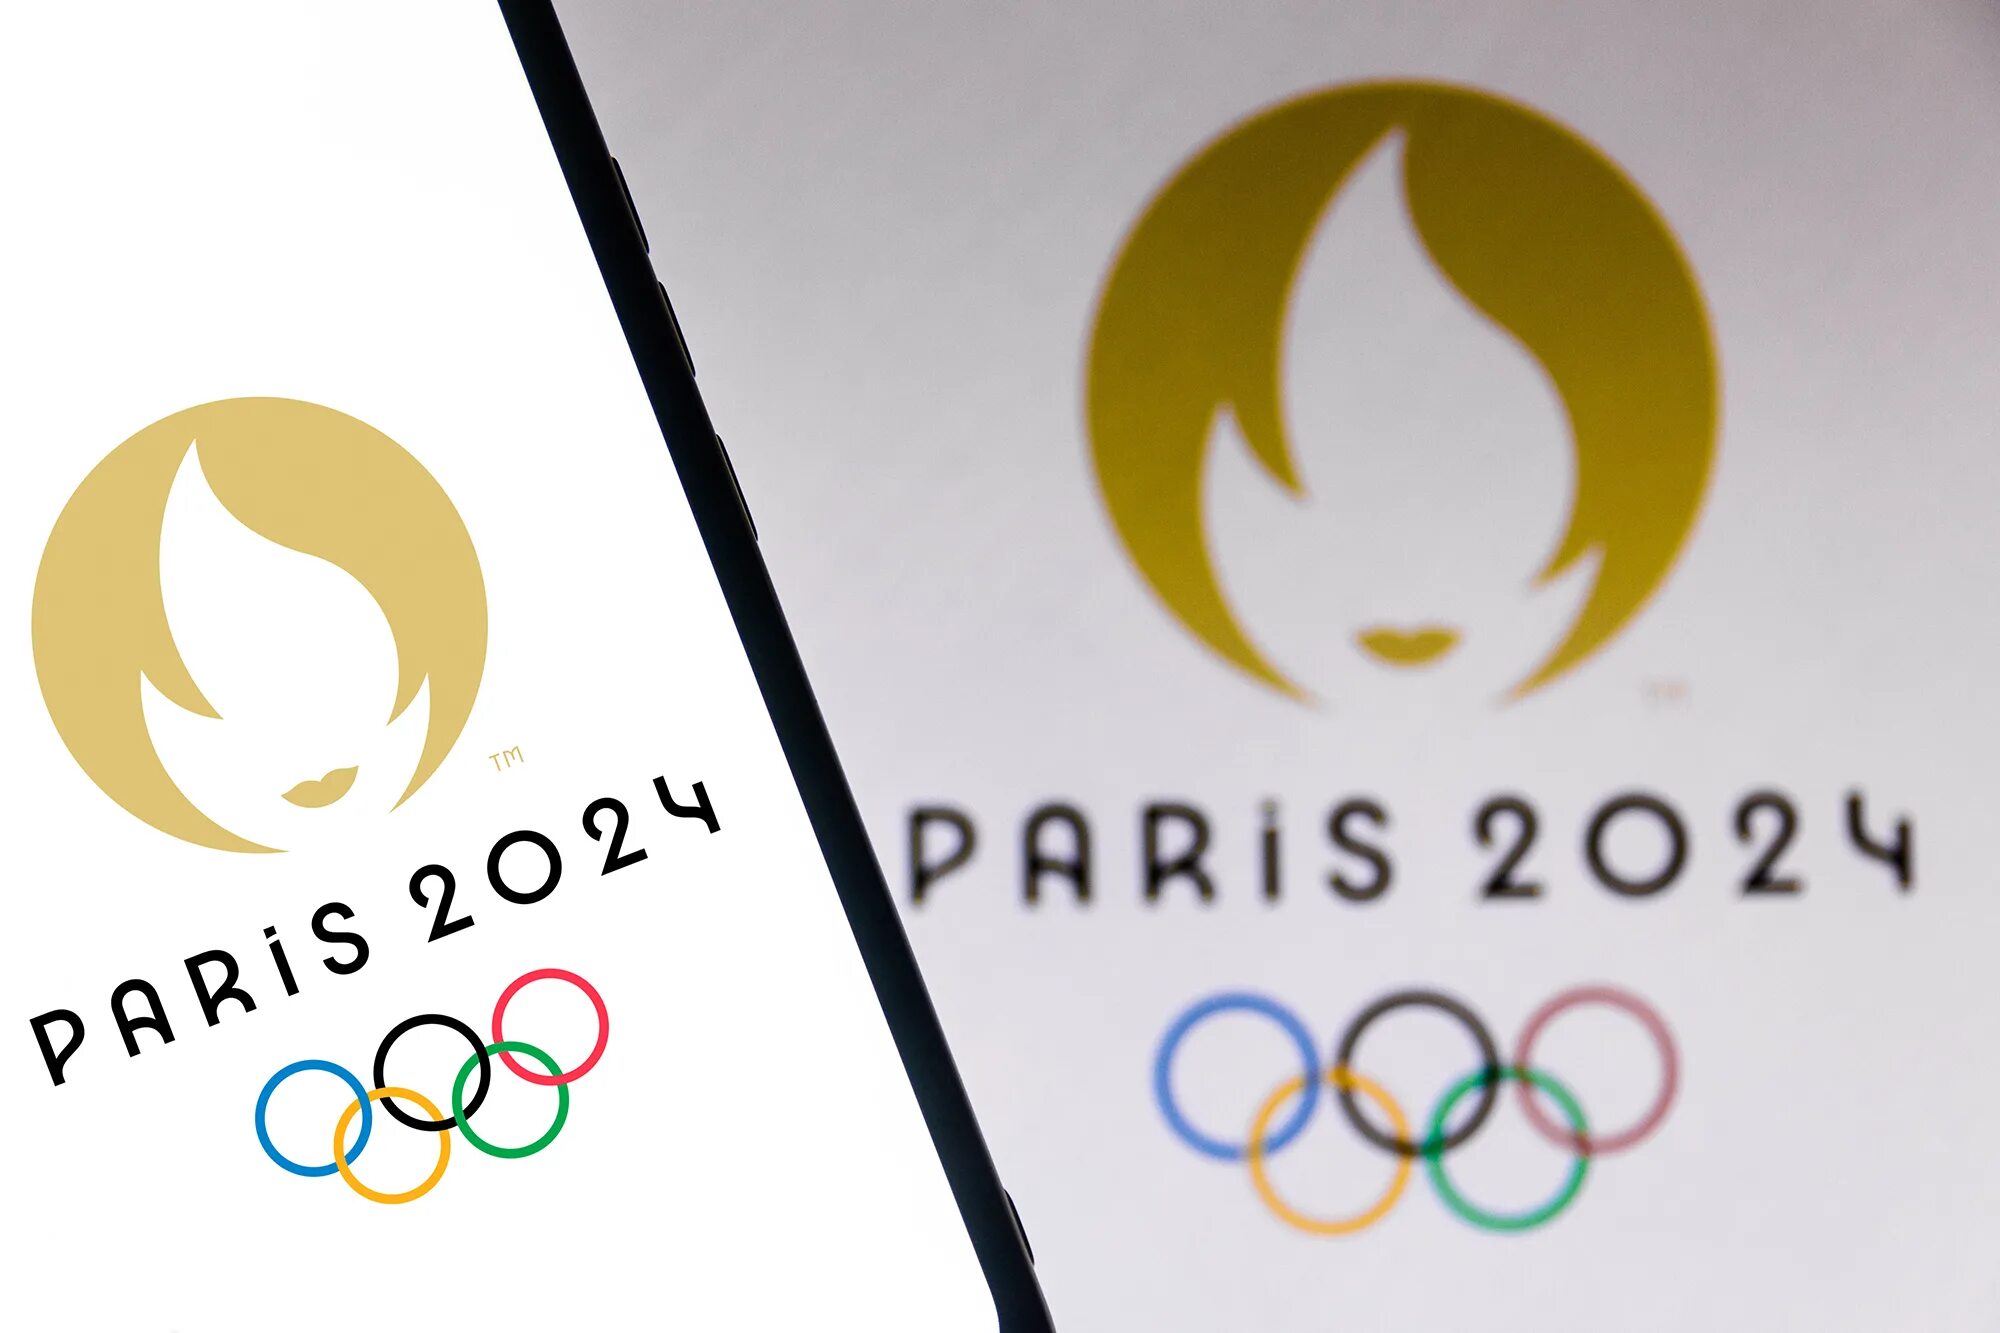 2024 картинки. Париж 2024 олимпиада. Лого олимпиады 2024. Paris 2024 Olympics logo. Летние Паралимпийские игры 2024.